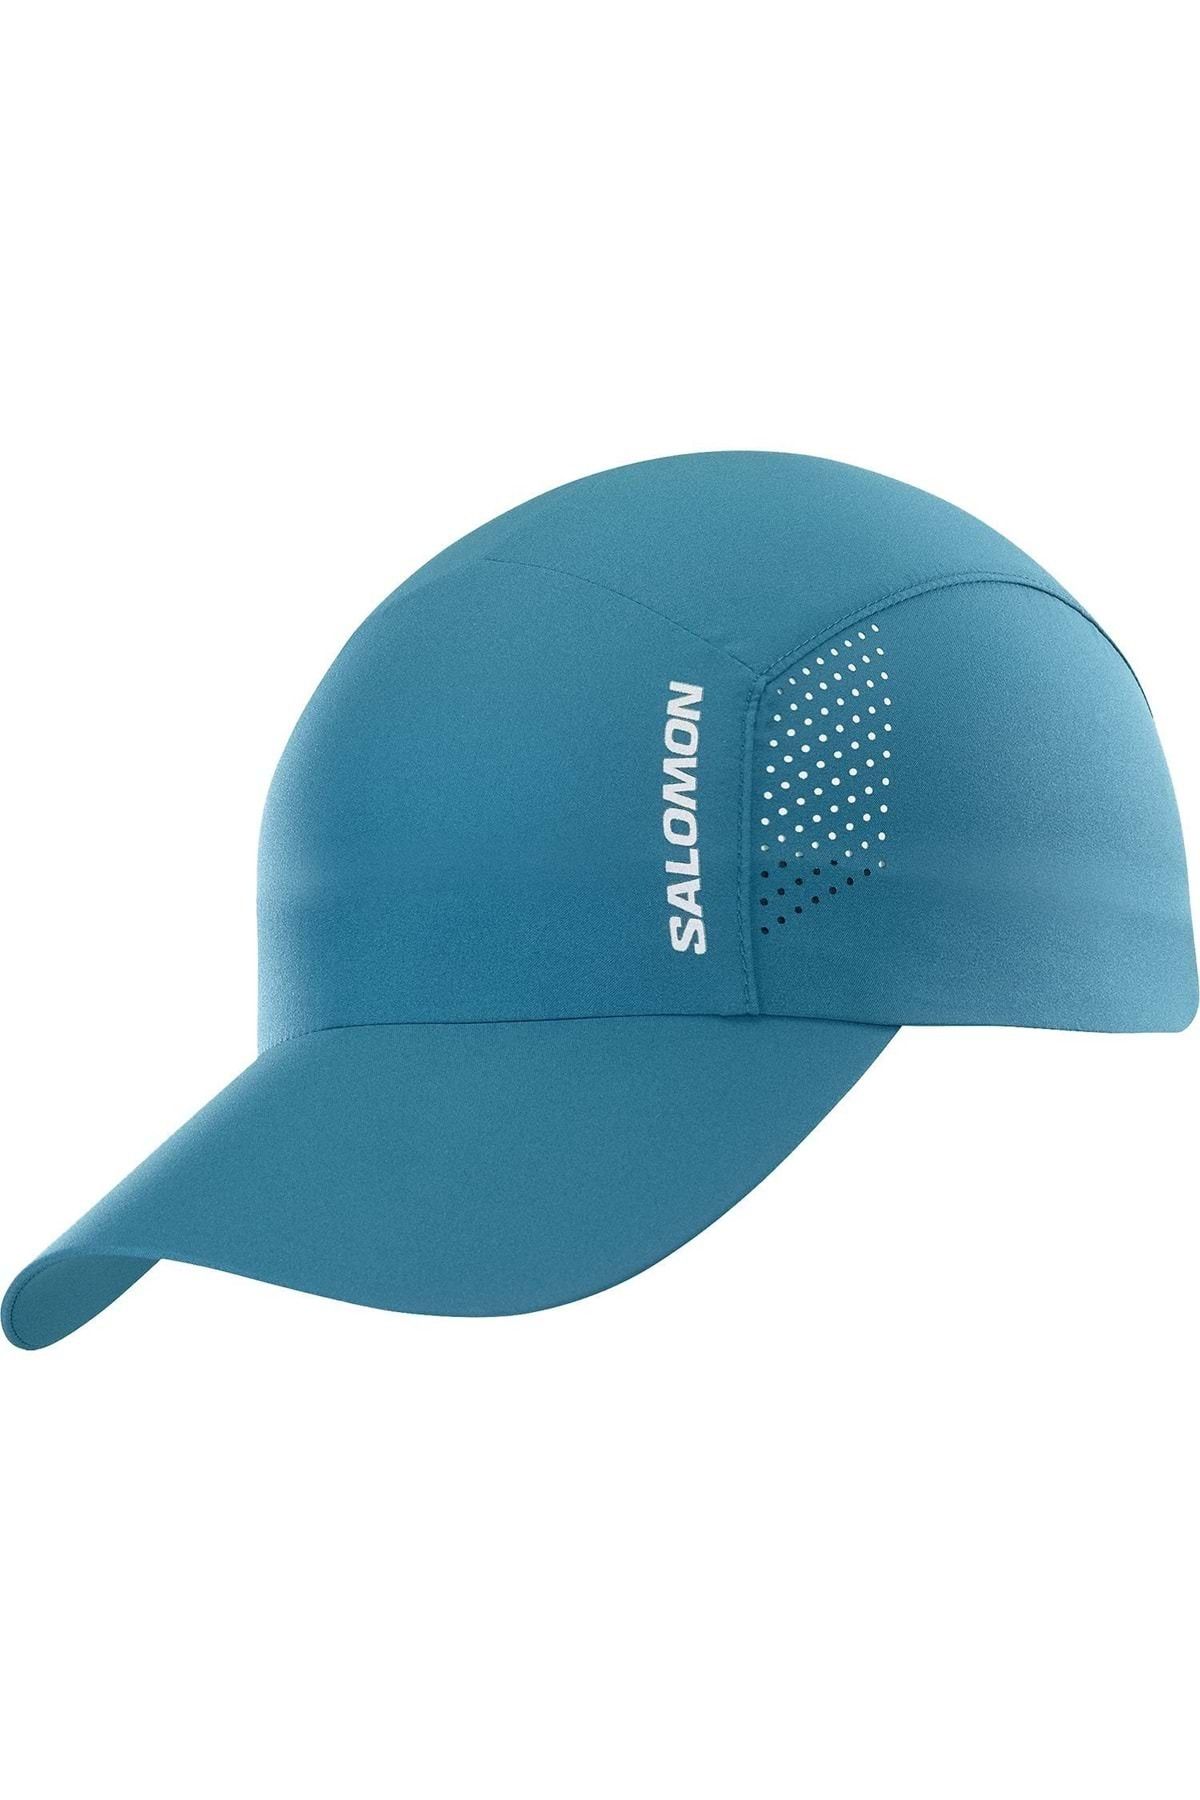 Salomon Cross Cap Unisex Hat Navy Blue